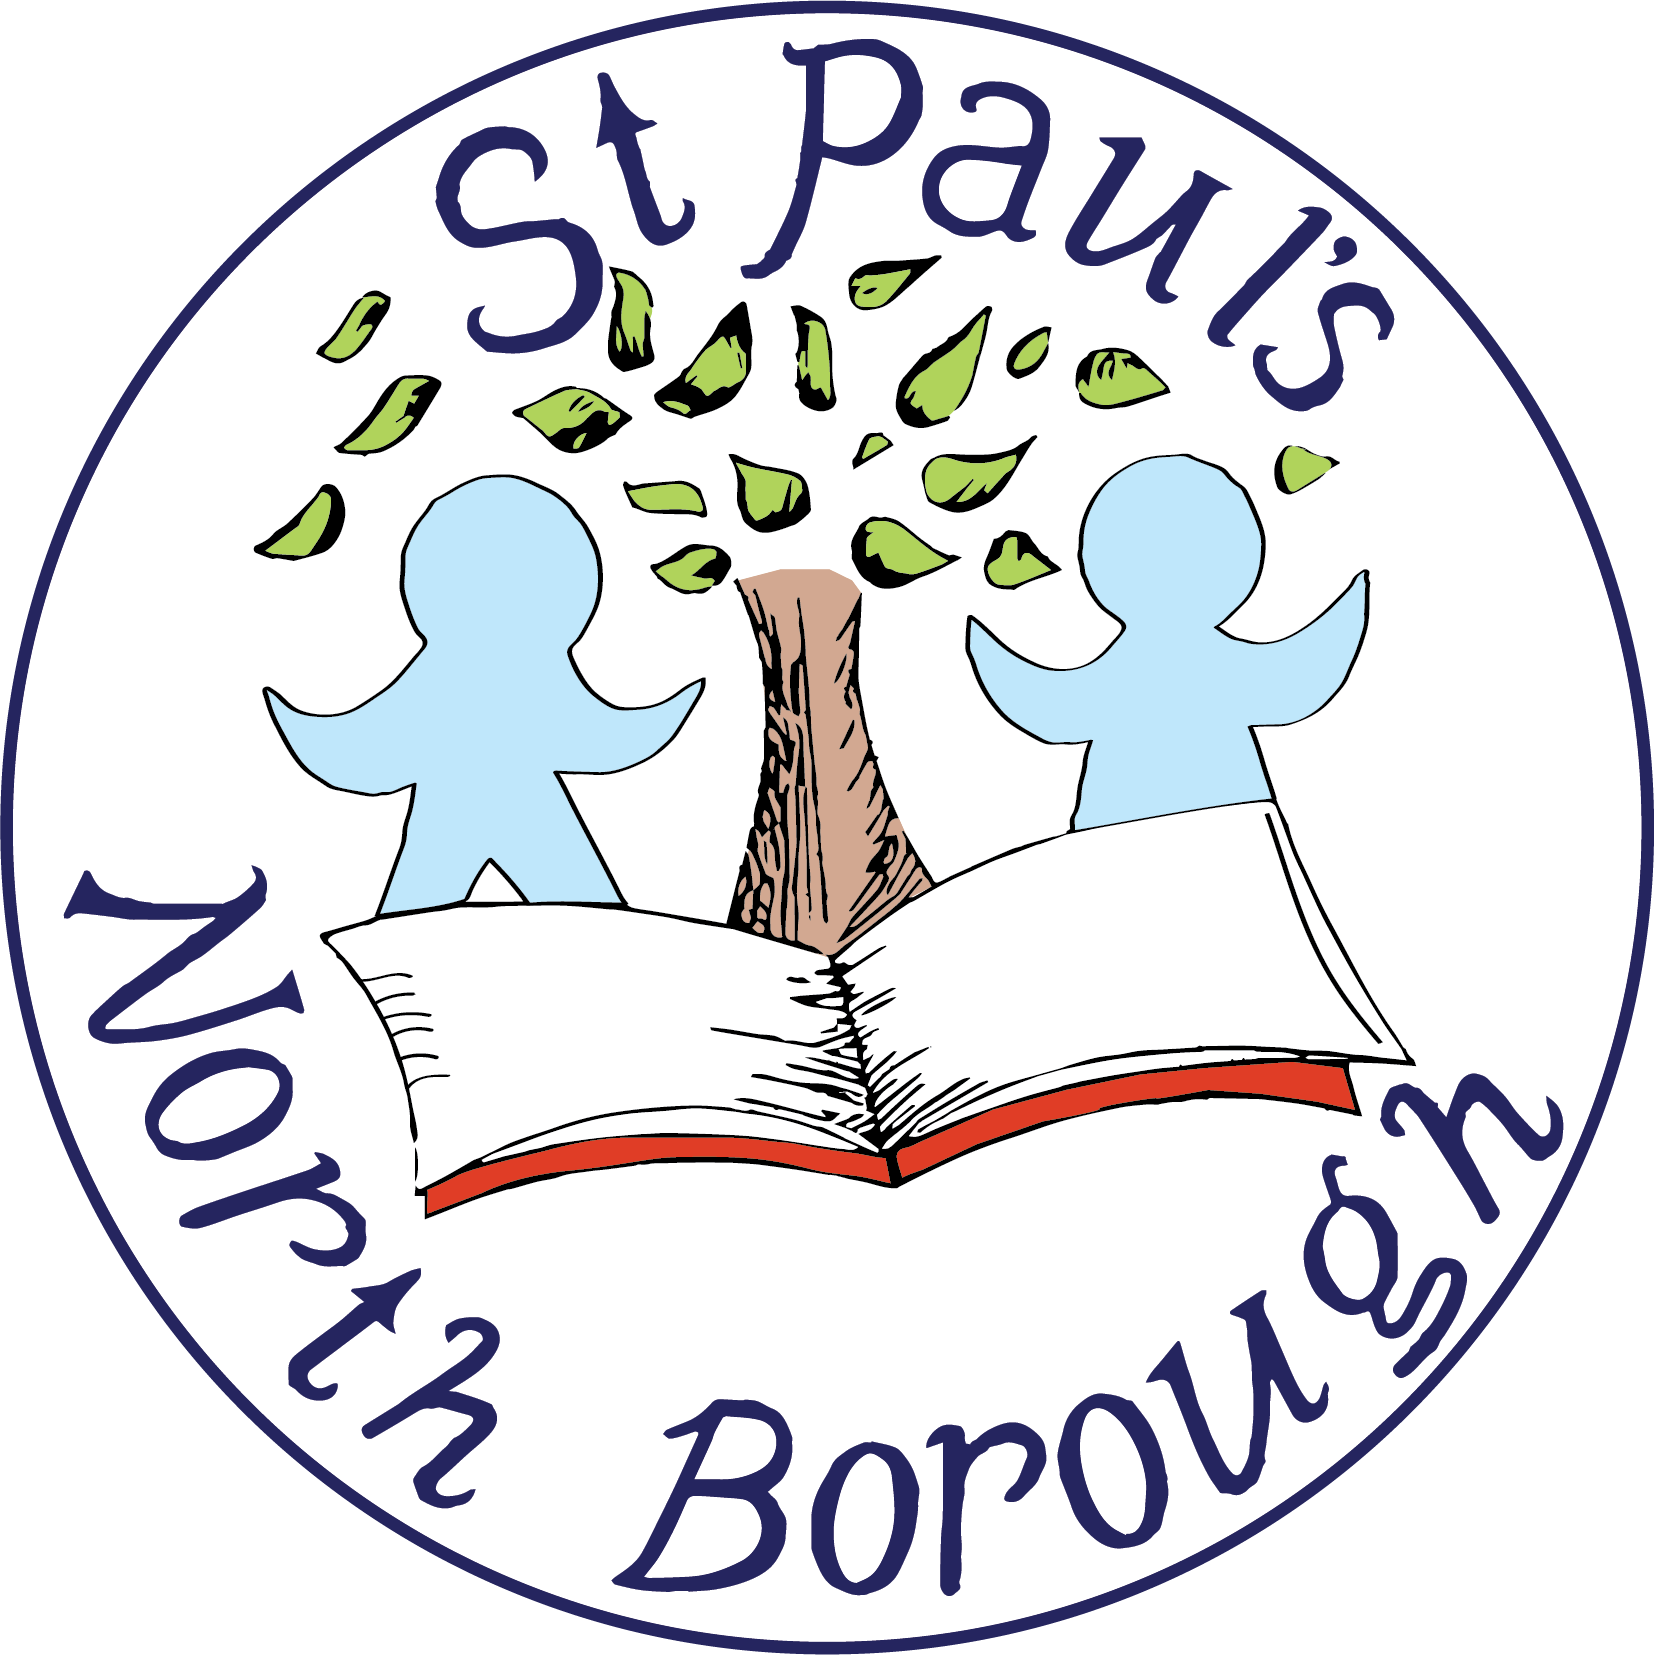 The St. Paul's & North Borough Federation